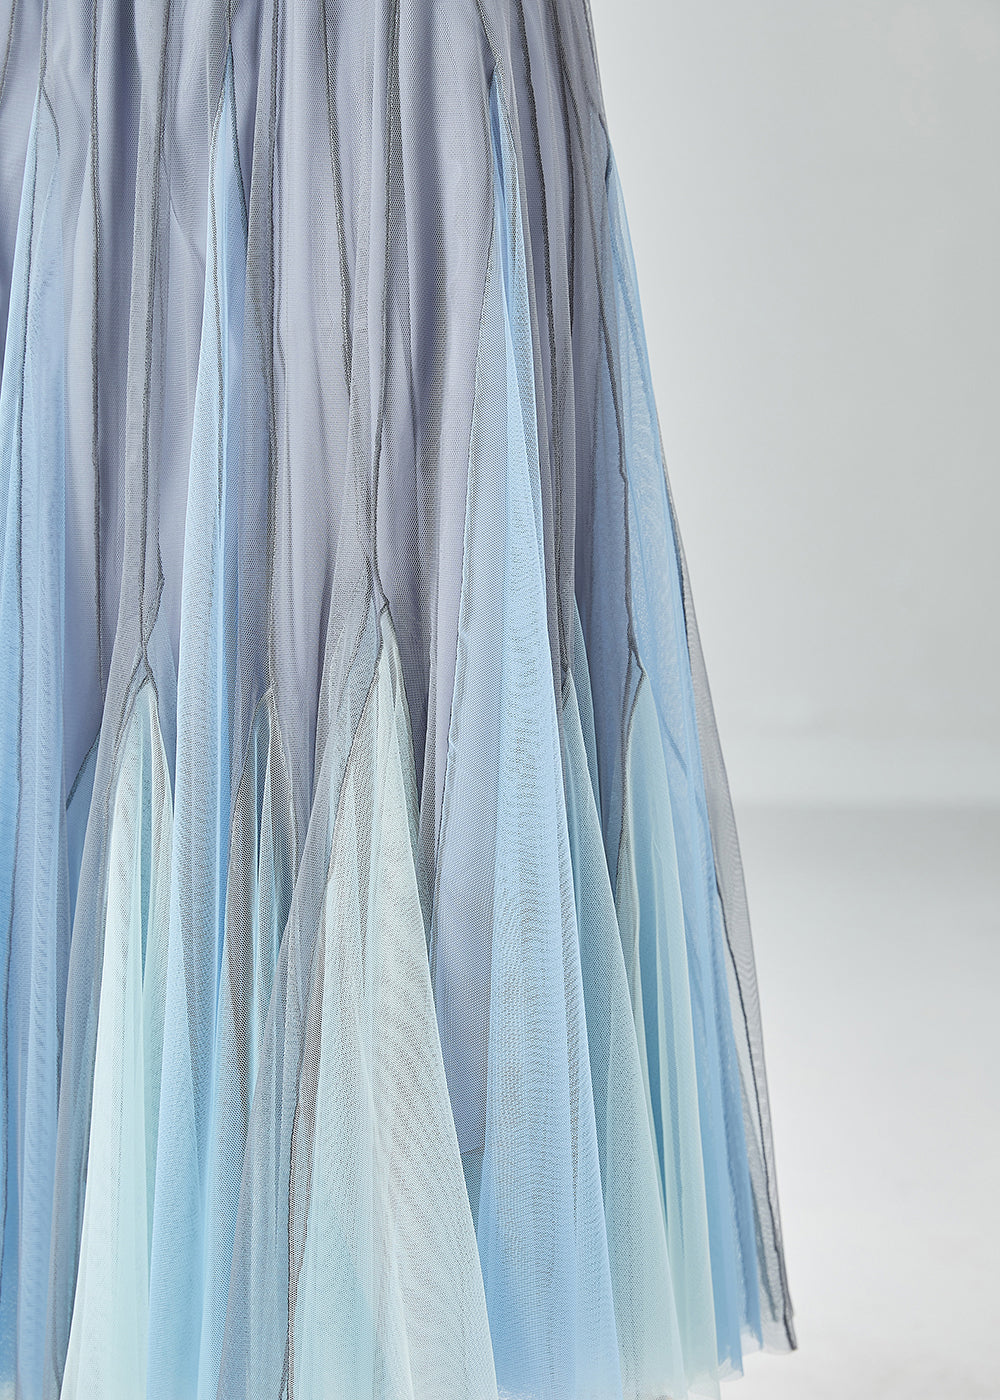 Handmade Grey Blue High Waist Patchwork Tulle Pleated Skirt Summer